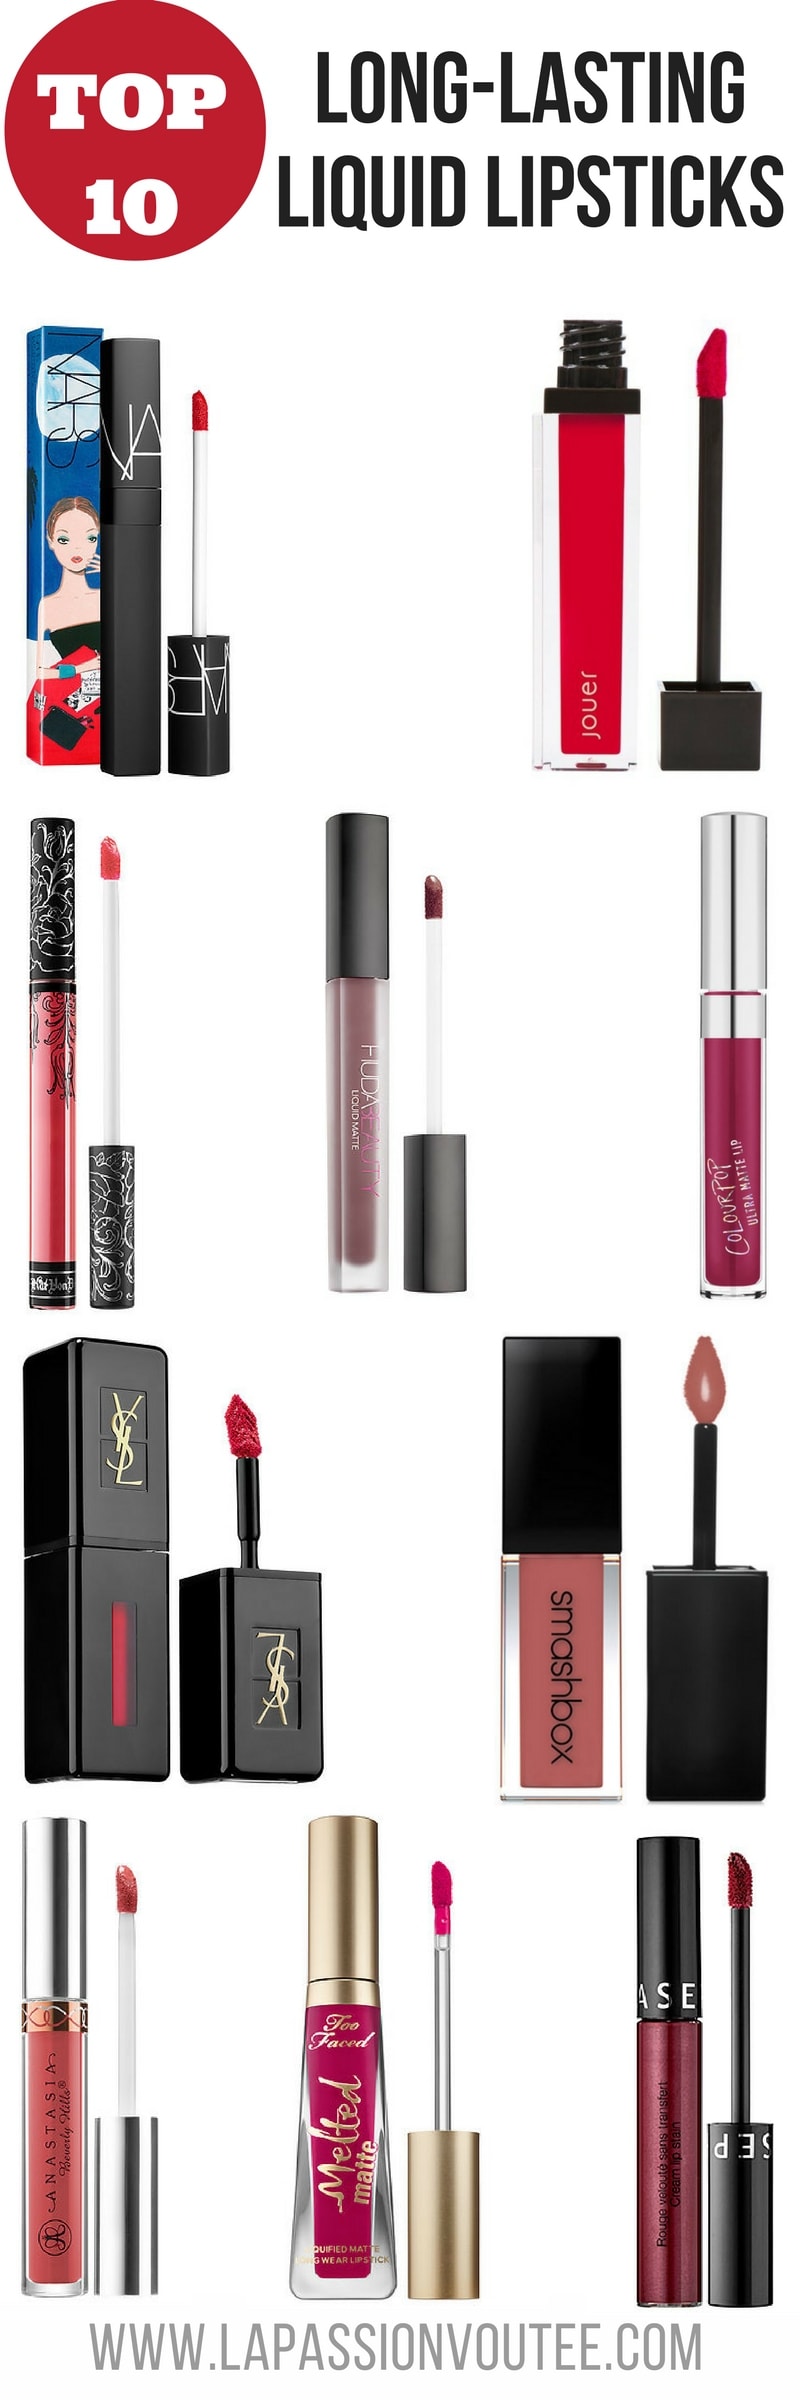 of the Top 10 Best Long-Lasting Liquid Lipsticks